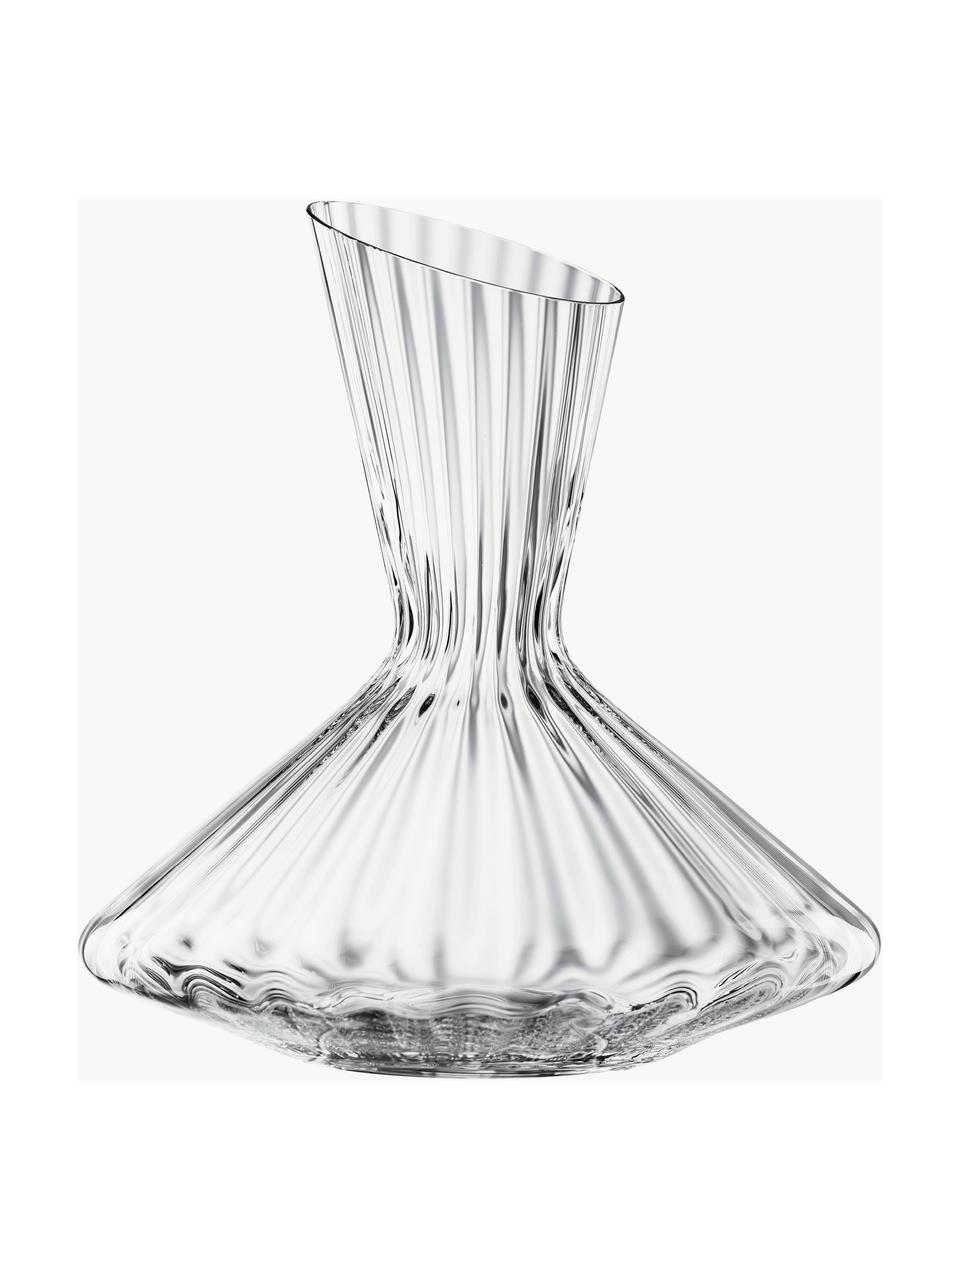 Kristall-Dekanter Lifestyle, 2.9 L, Kristallglas, Transparent, 2.9 L